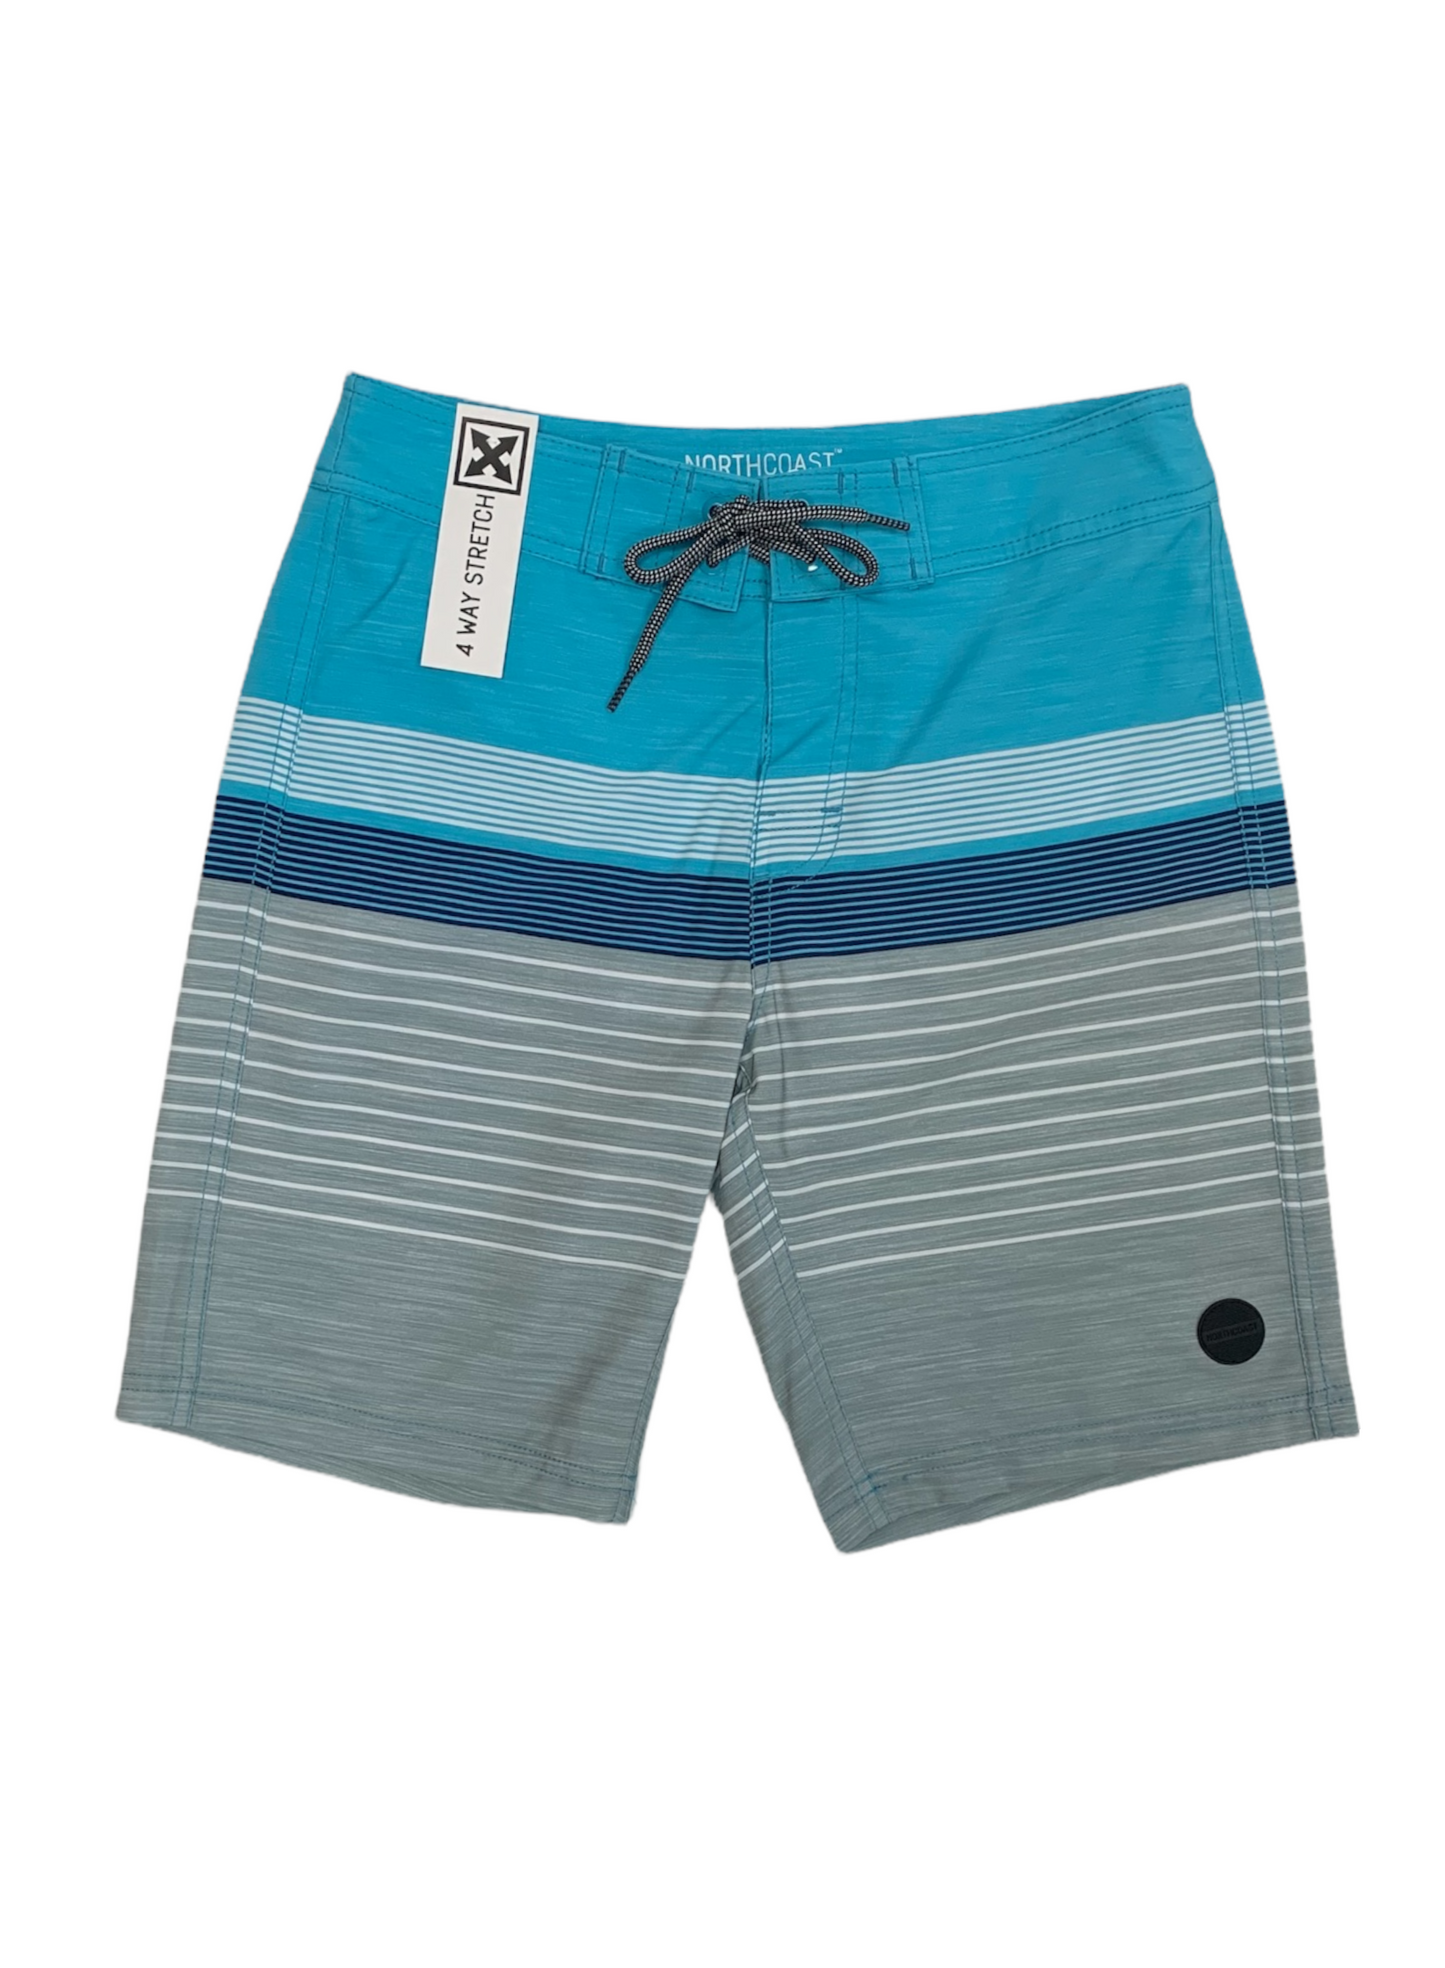 Men's Northcoast blue and grey swim short